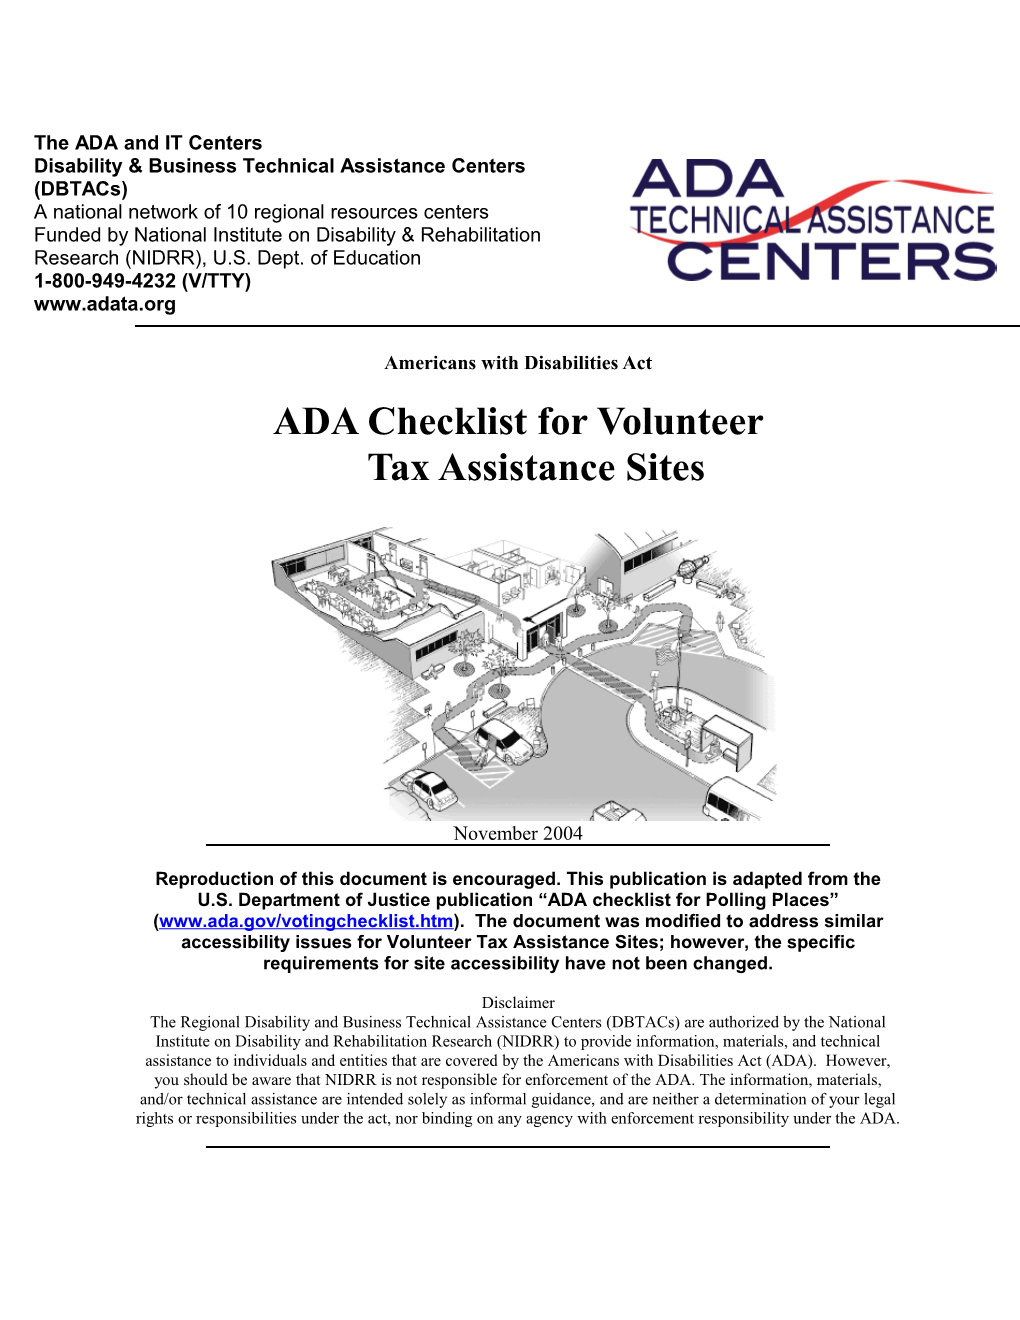 ADA Checklist for Volunteer Tax Assistance Sites